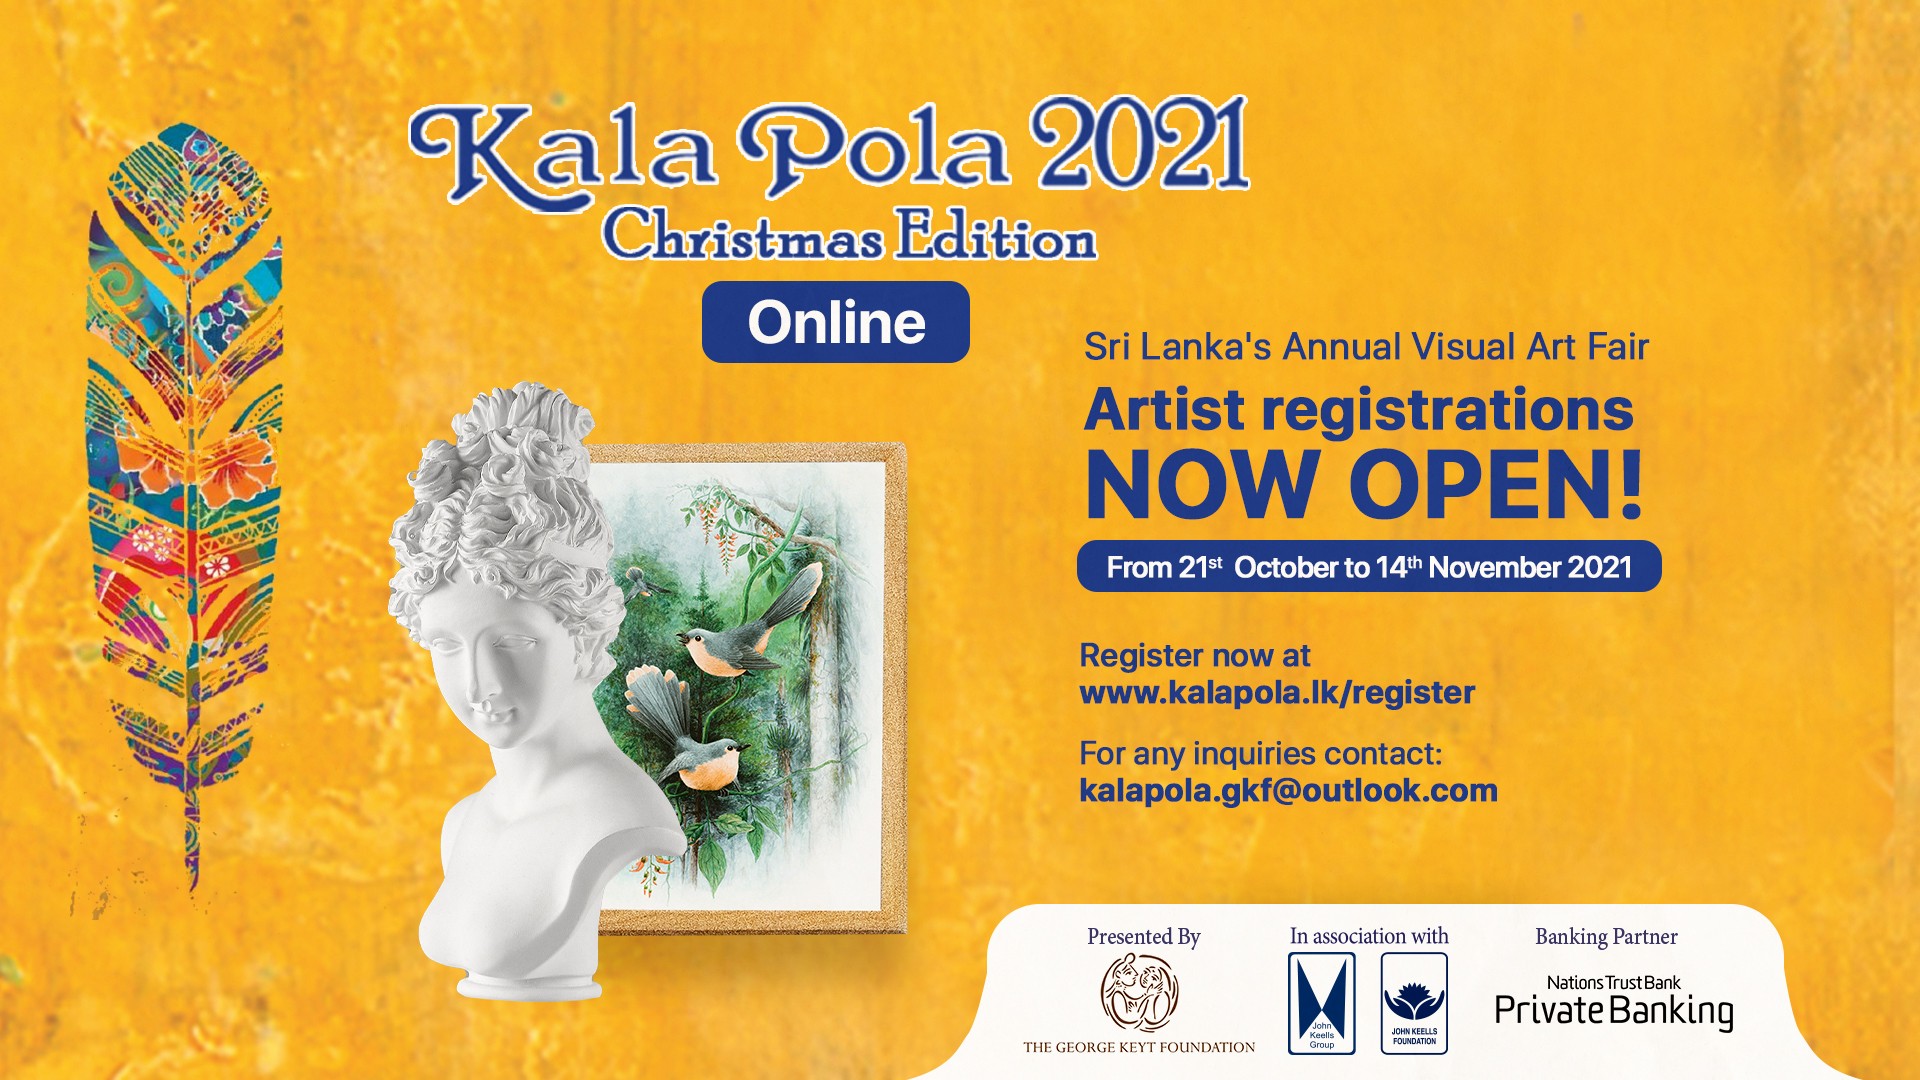 Kala Pola Christmas Edition by GKF, JKG & JKF GKF, JKG & JKF